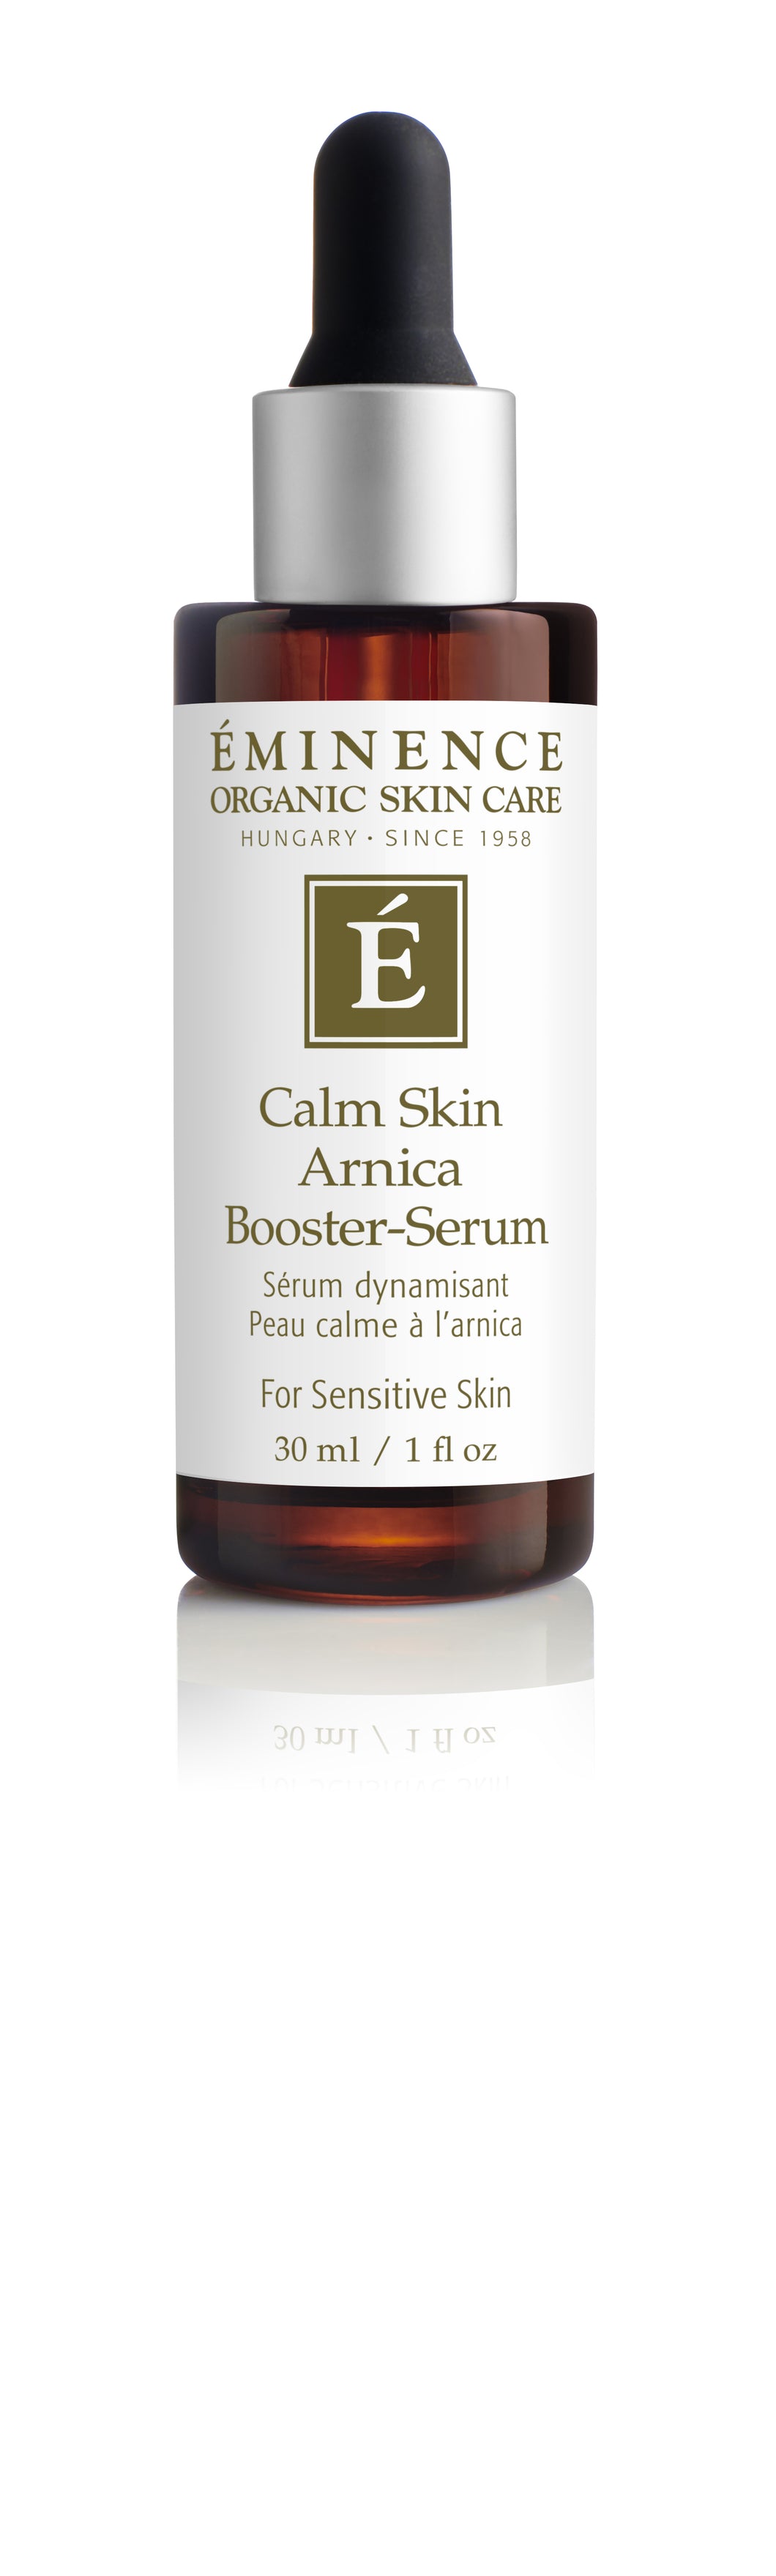 Eminence: Calm Skin Arnica Booster-Serum